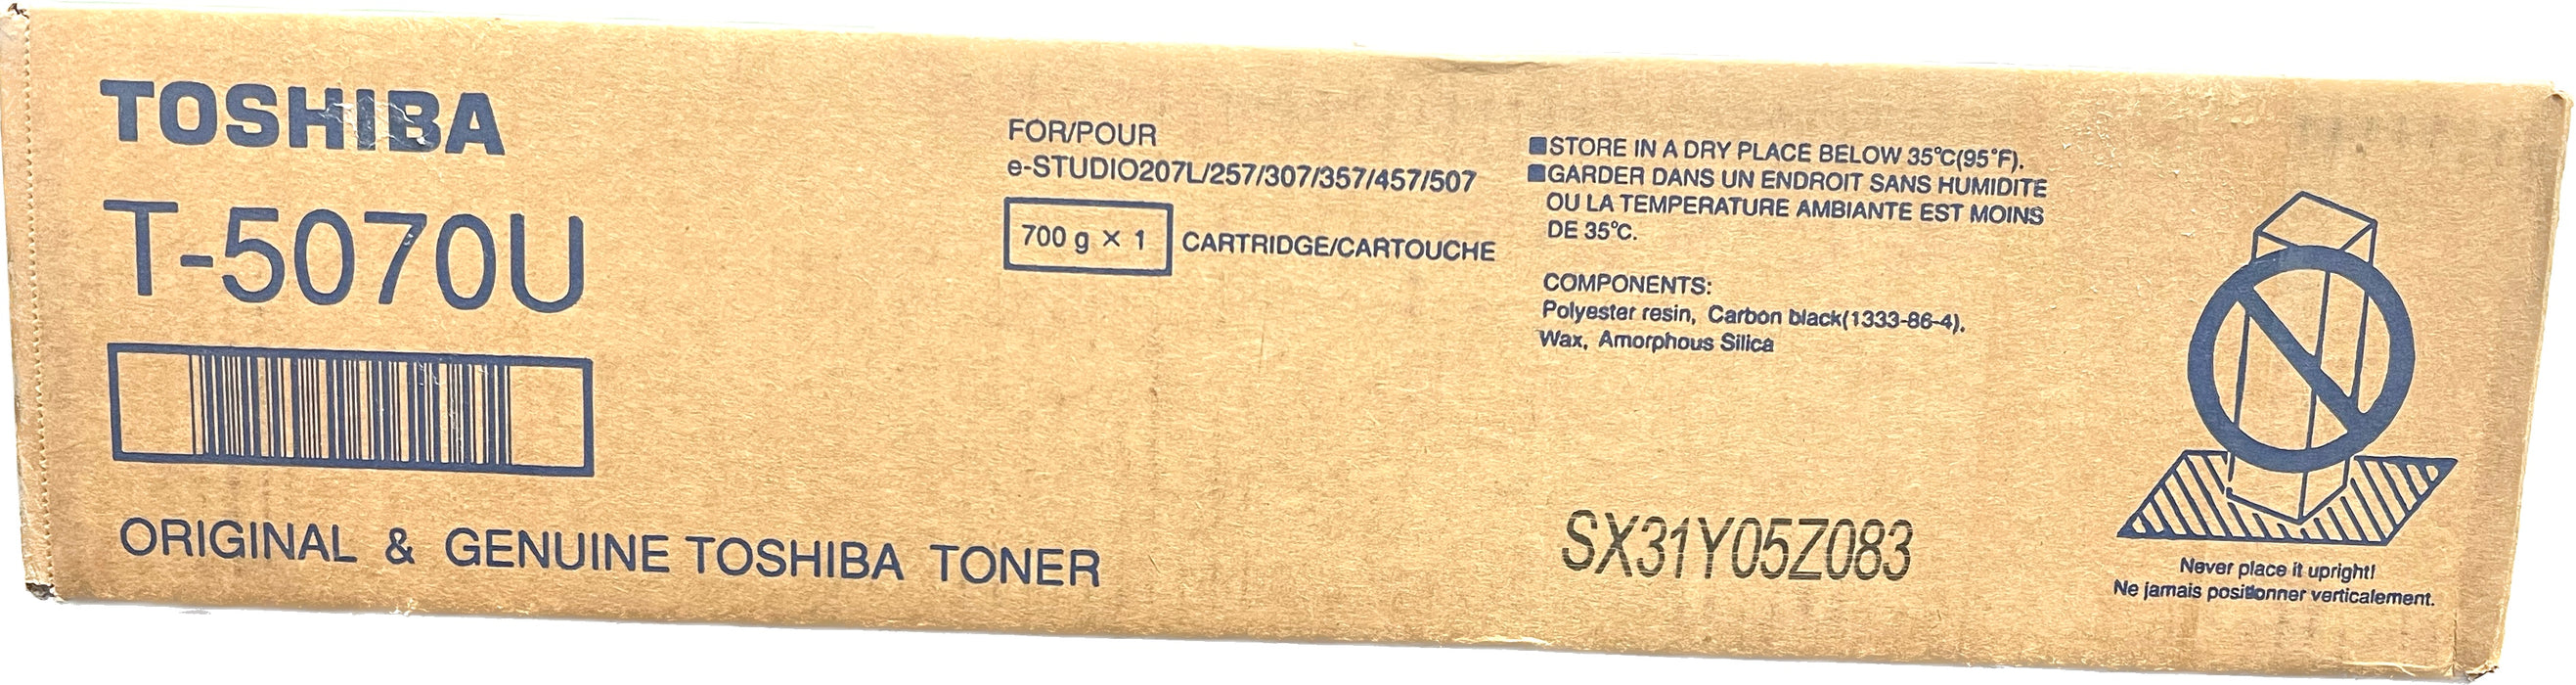 Genuine Toshiba Black Toner Cartridge | T-5070U